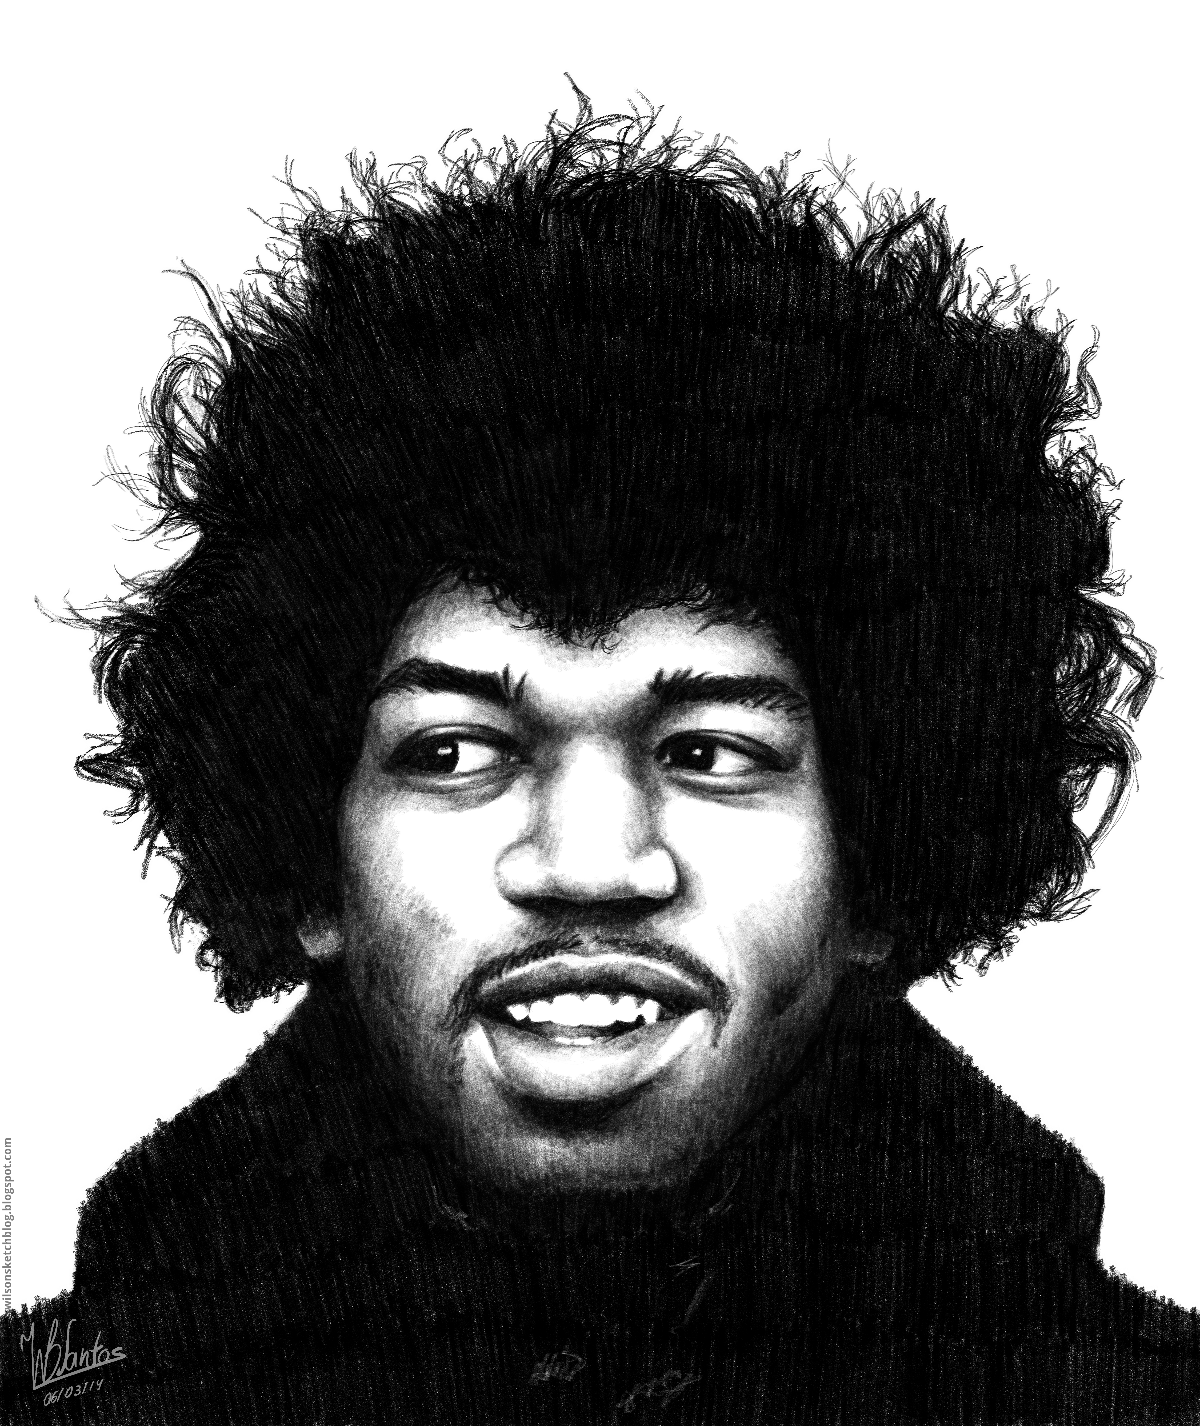 Jimi Hendrix - Experience (Pencil drawing)